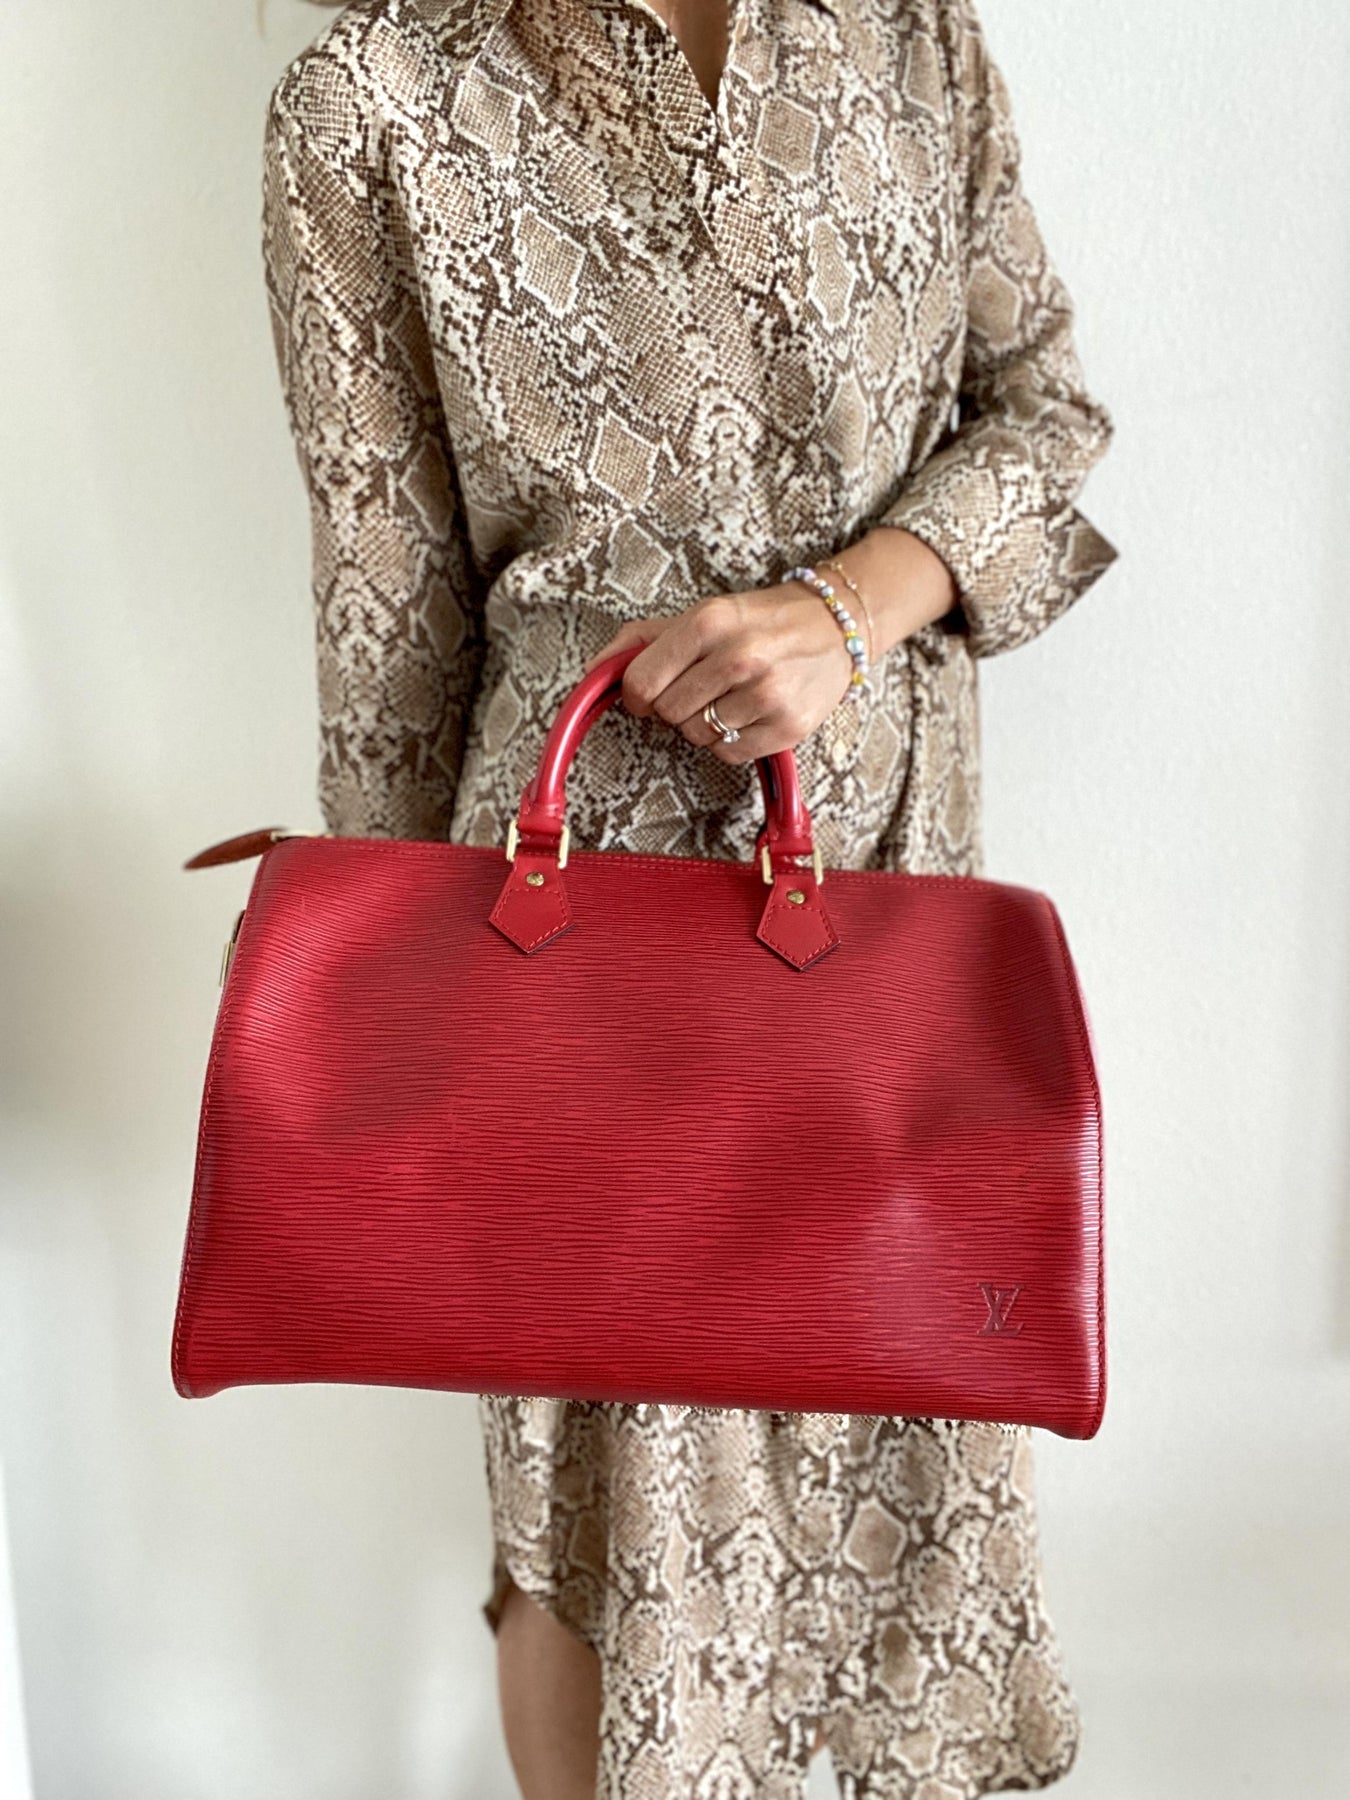 Auth Louis Vuitton Epi Speedy 40 M42987 Women's Boston Bag,Handbag  Castilian Red